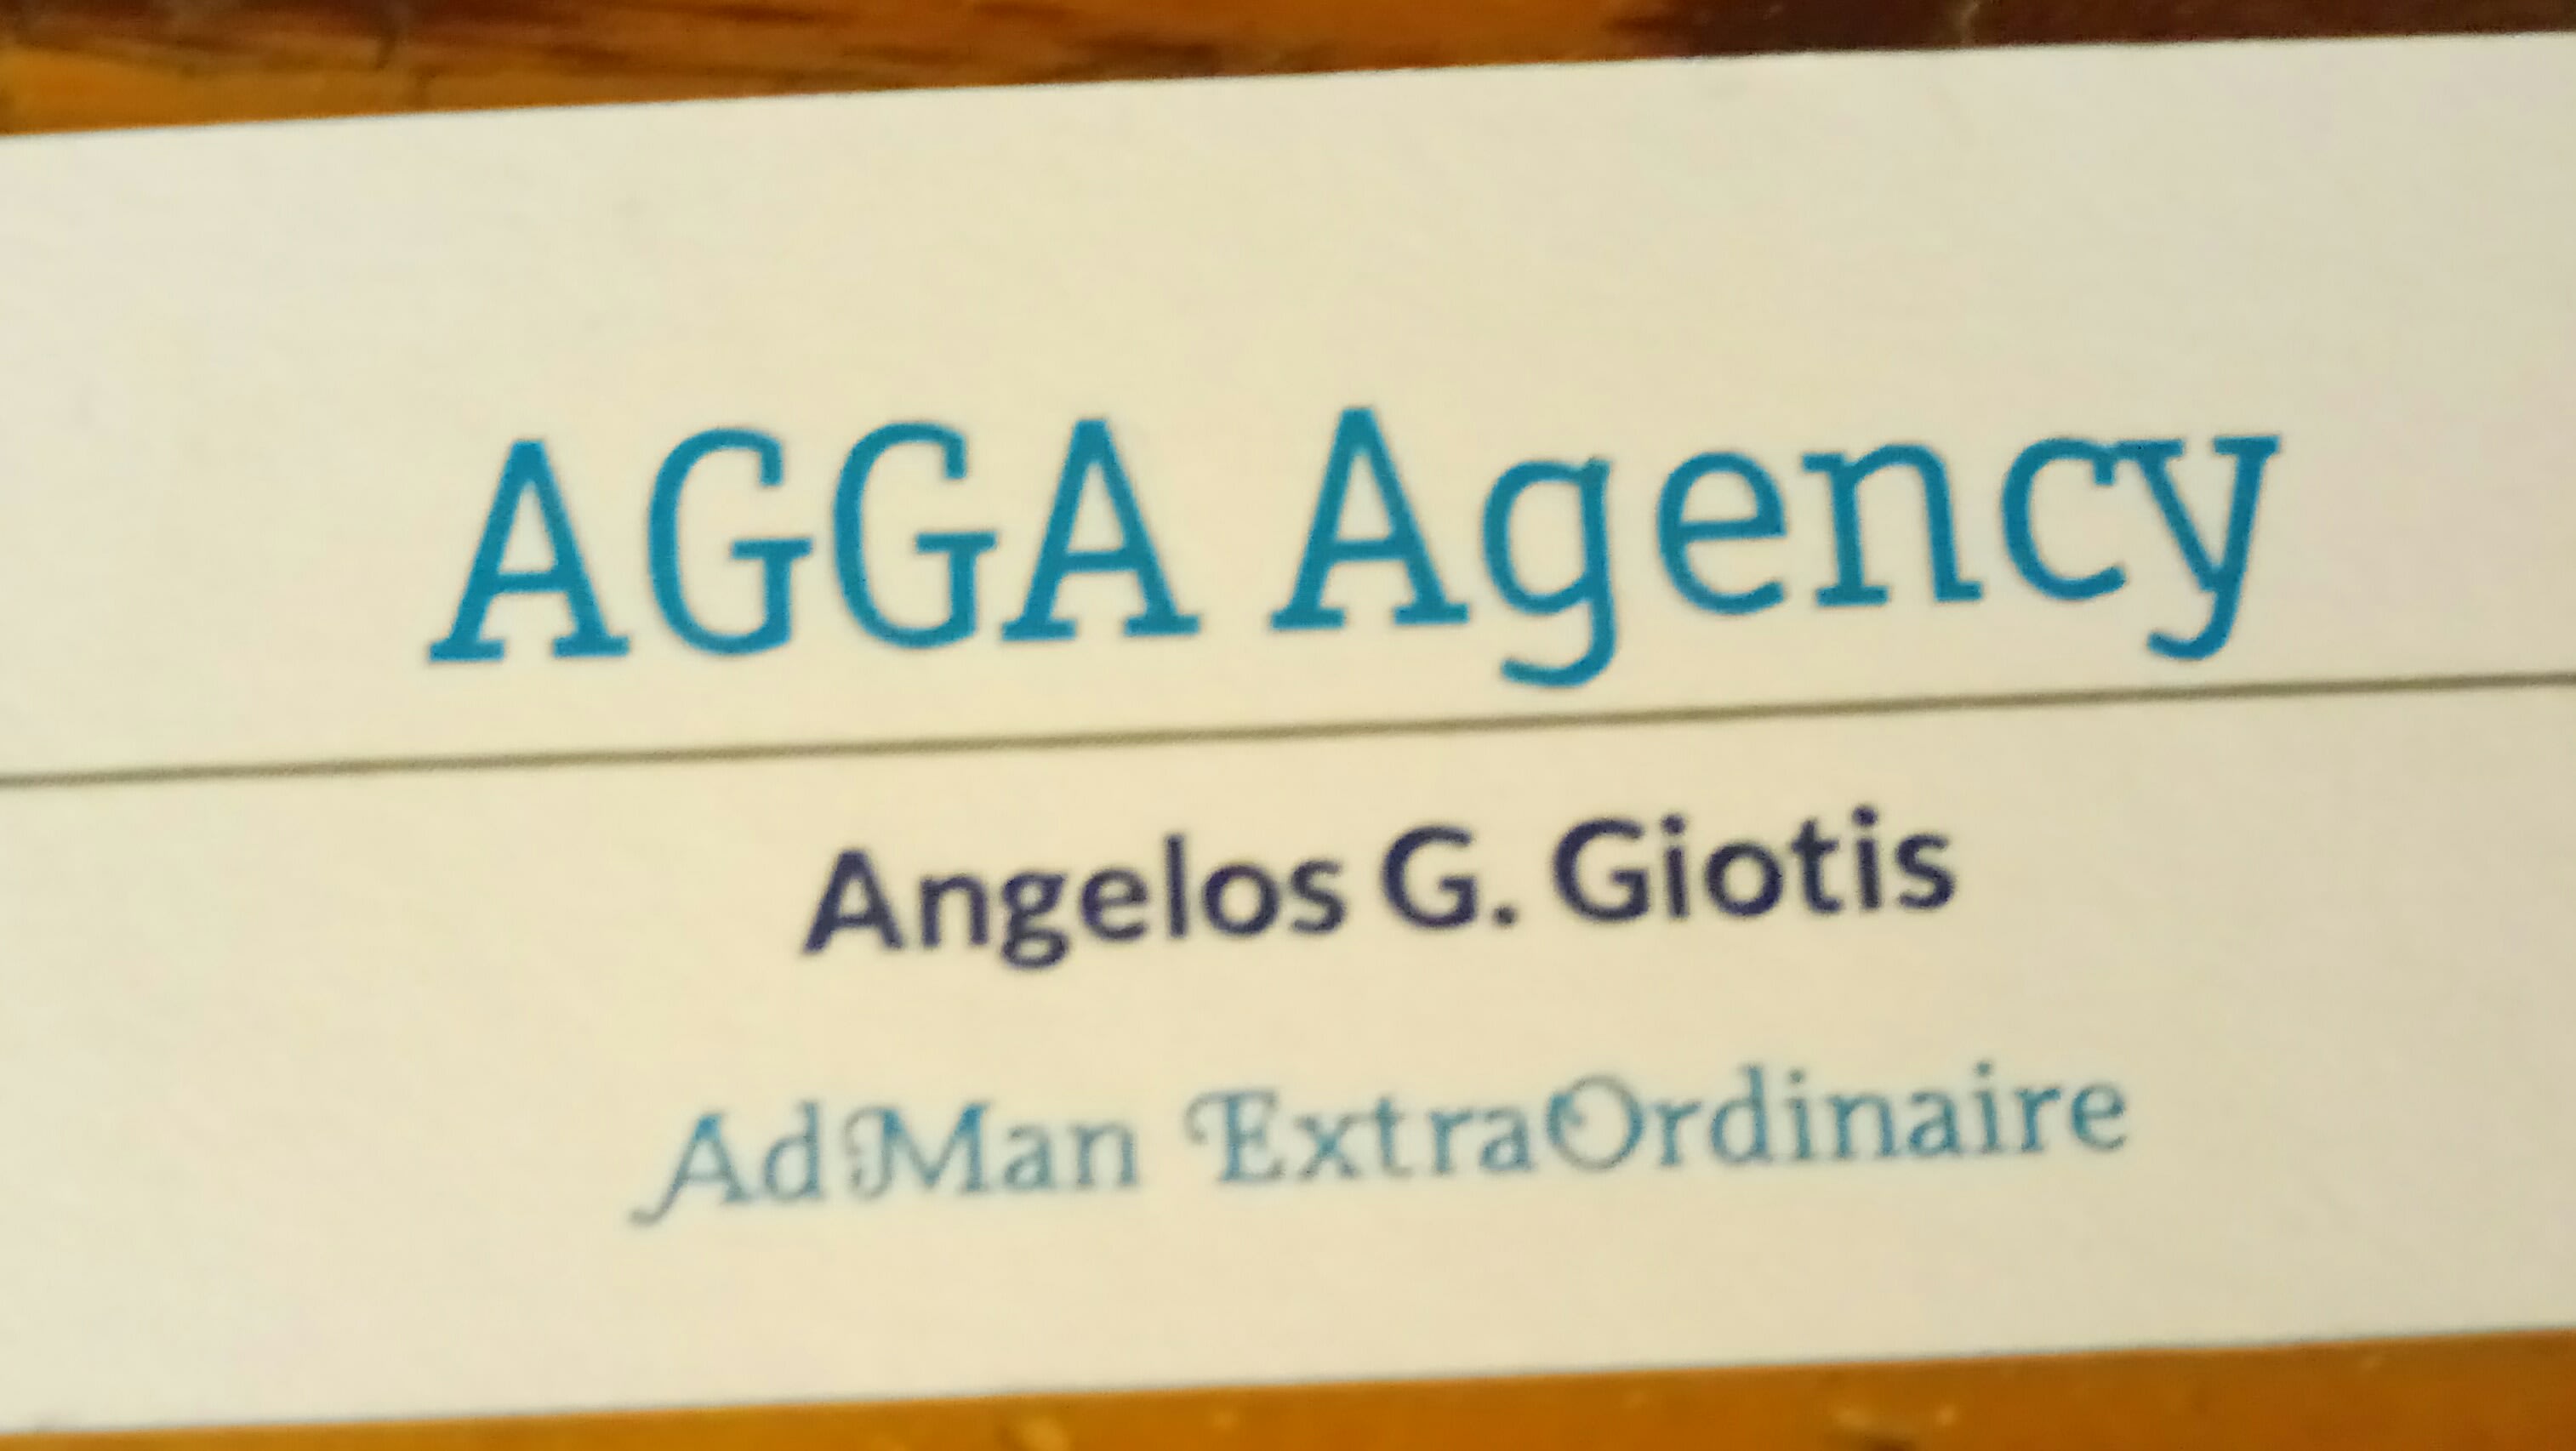 Agga Media Group